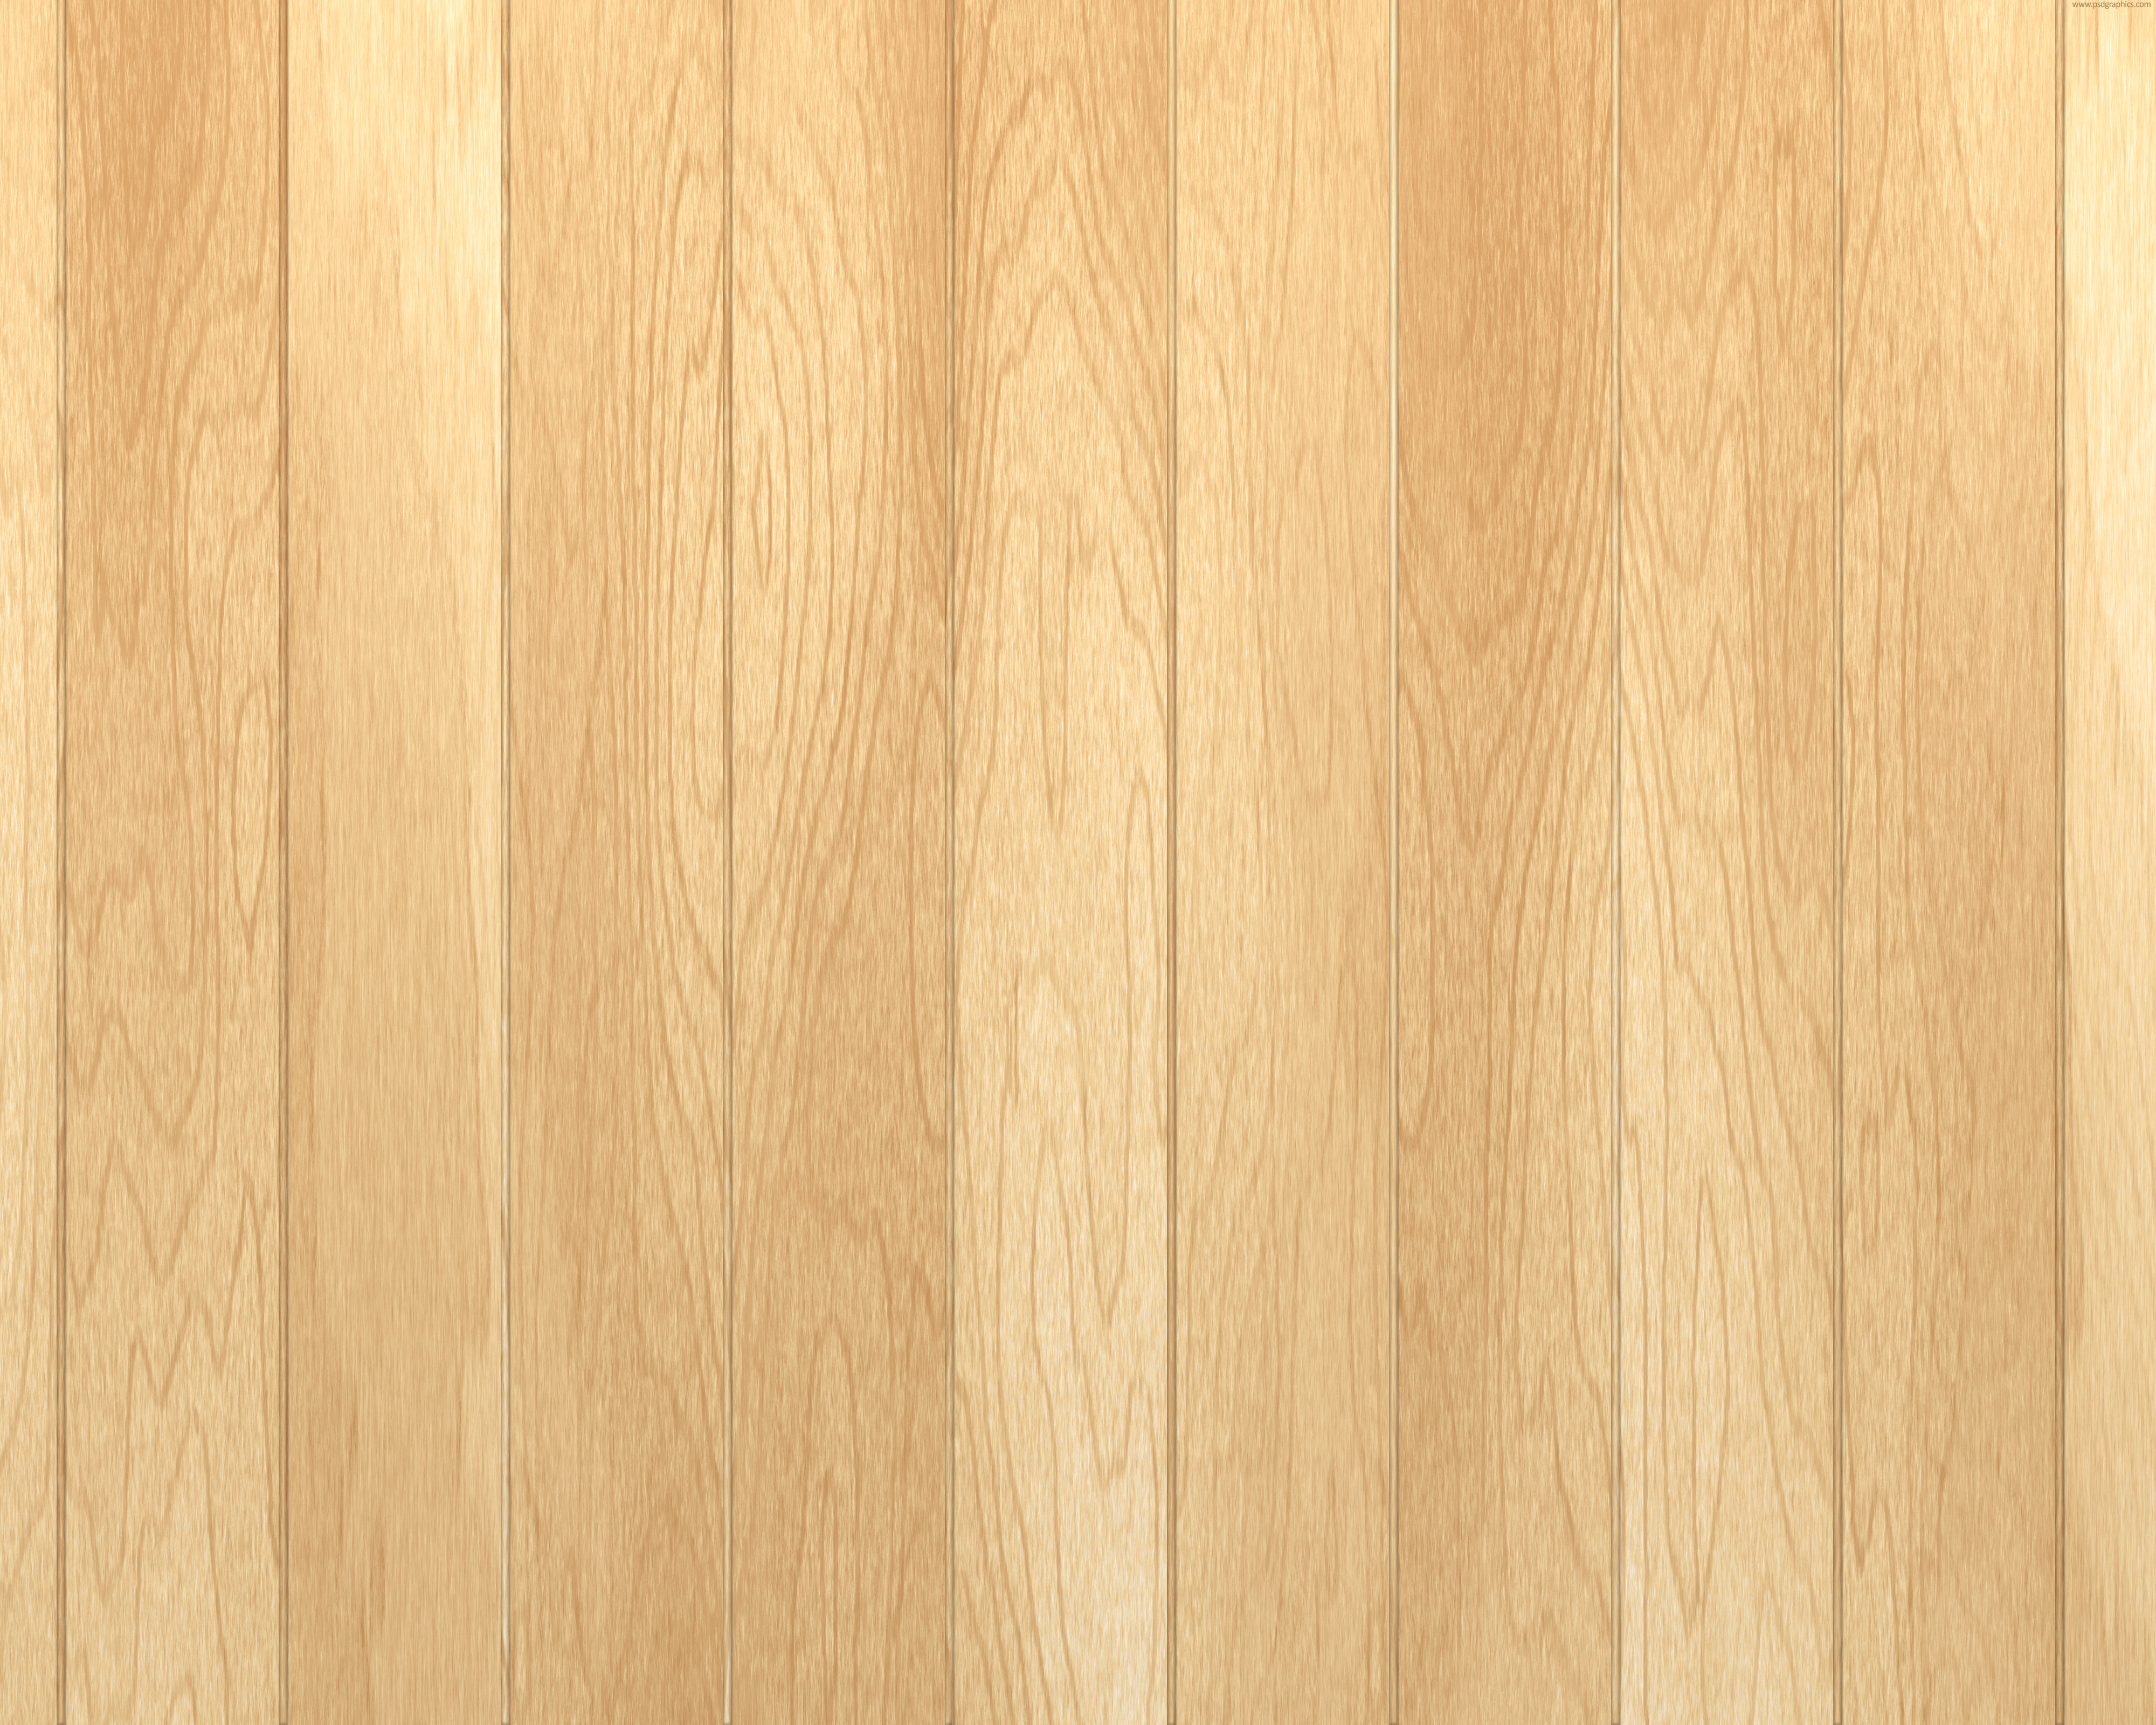 Wooden Floor Texture Basketball Light Background